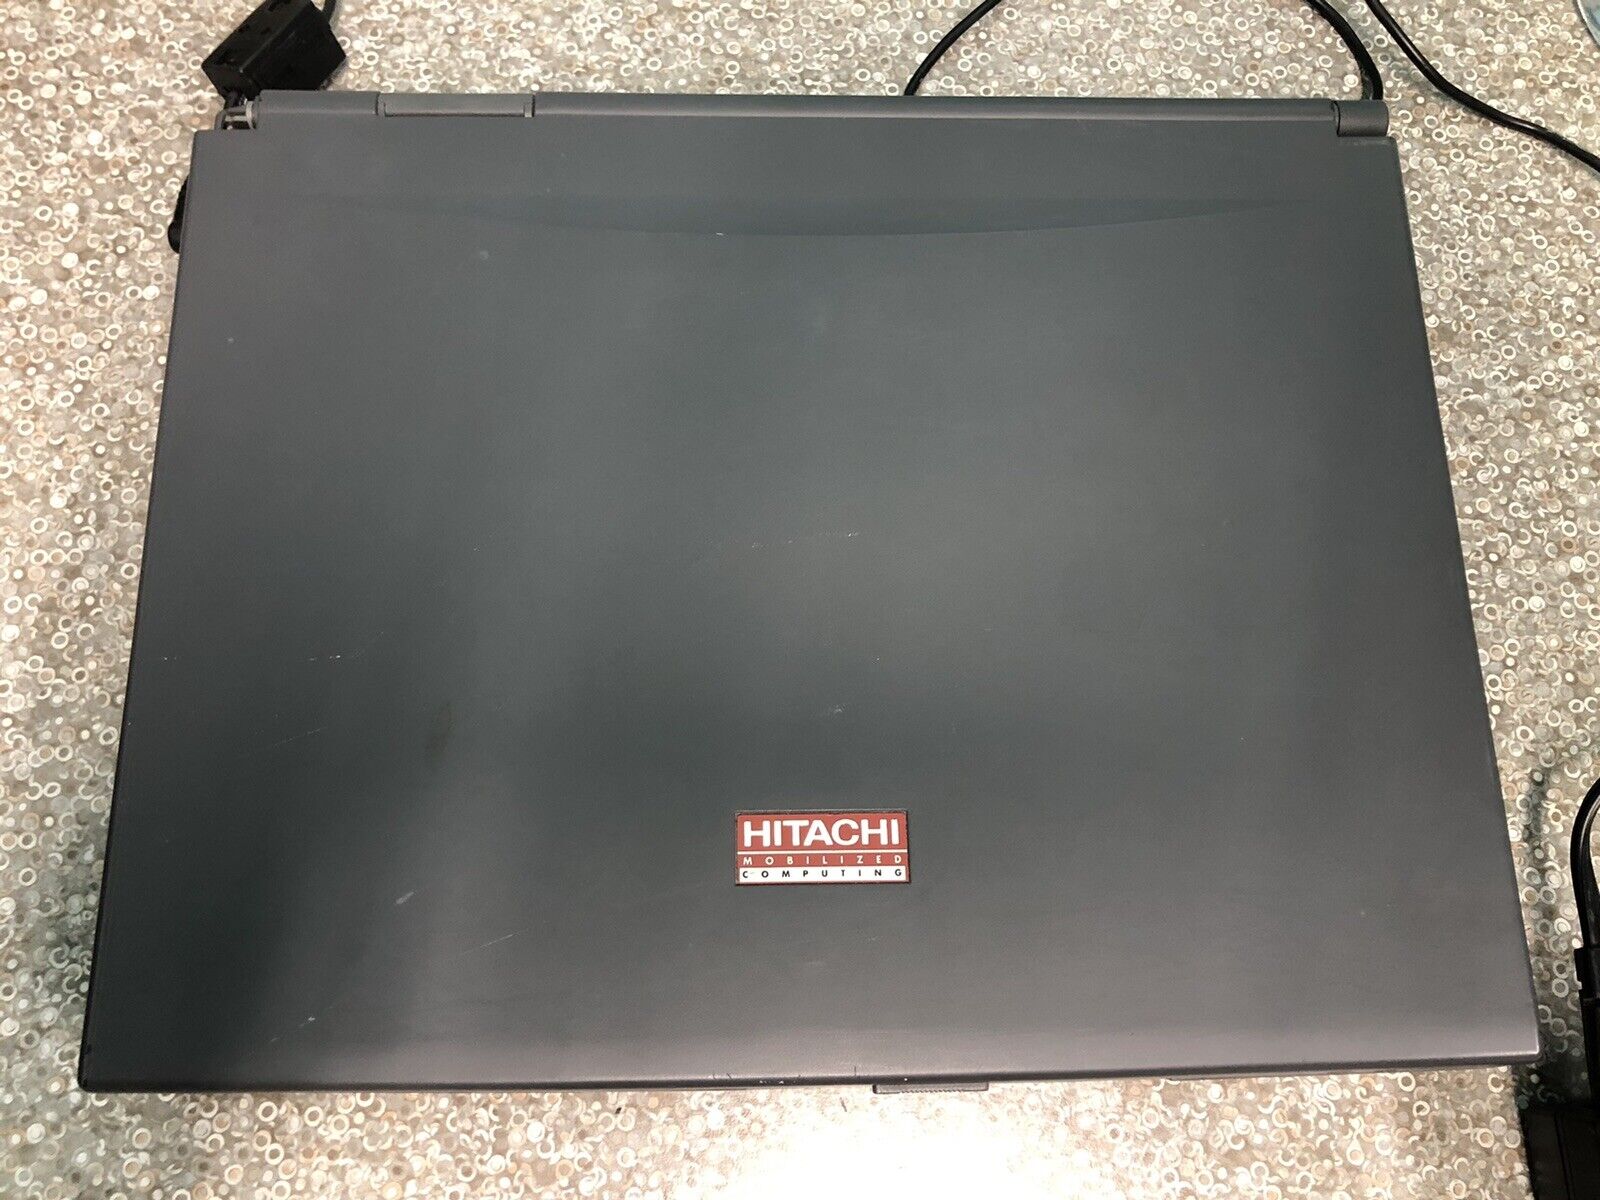 Hitatchi Visionbook 7560 Working Vintage Laptop 1998